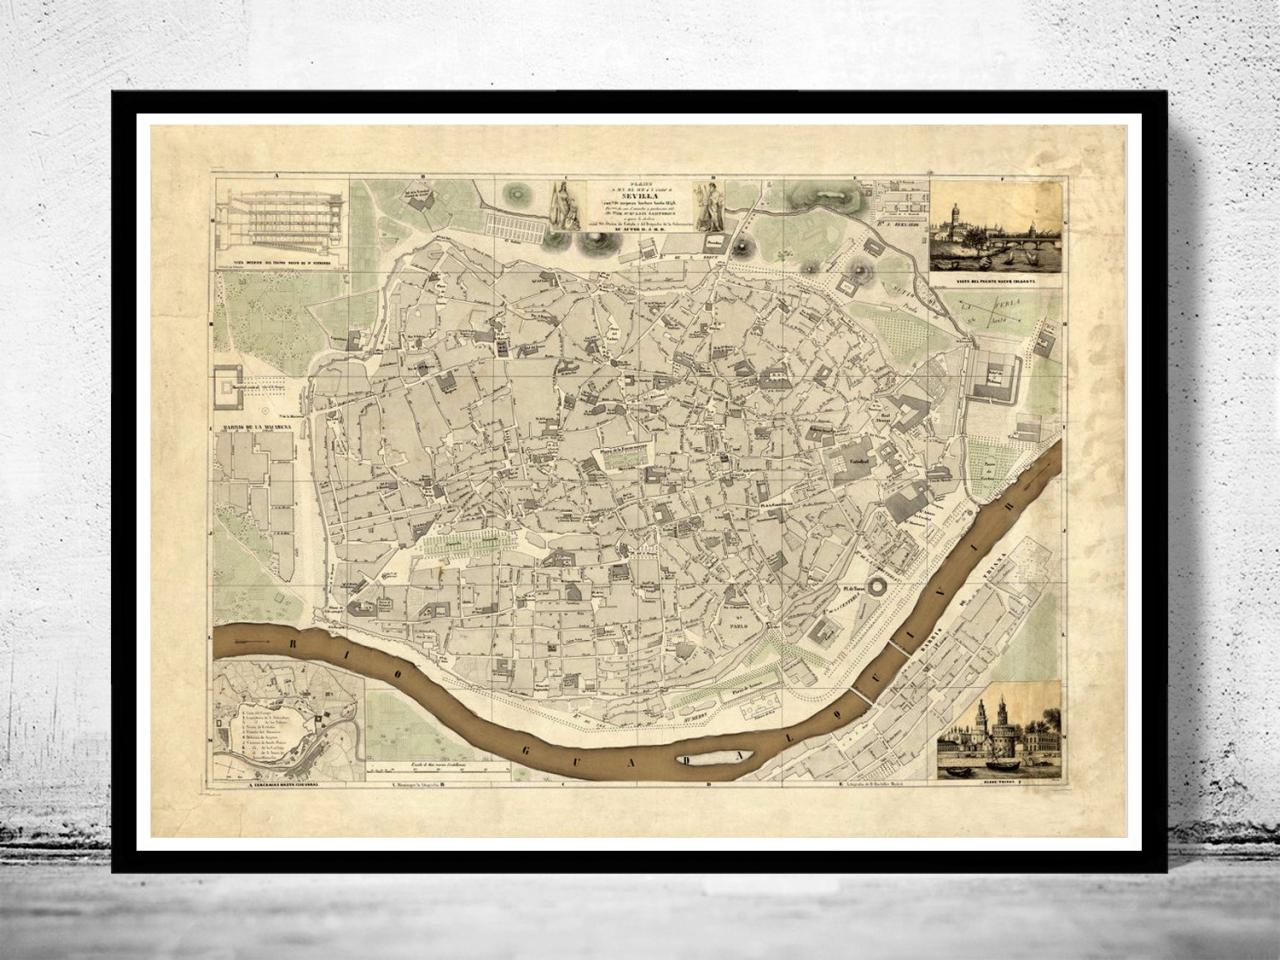 Old Map of Seville Sevilla, Spain 1848